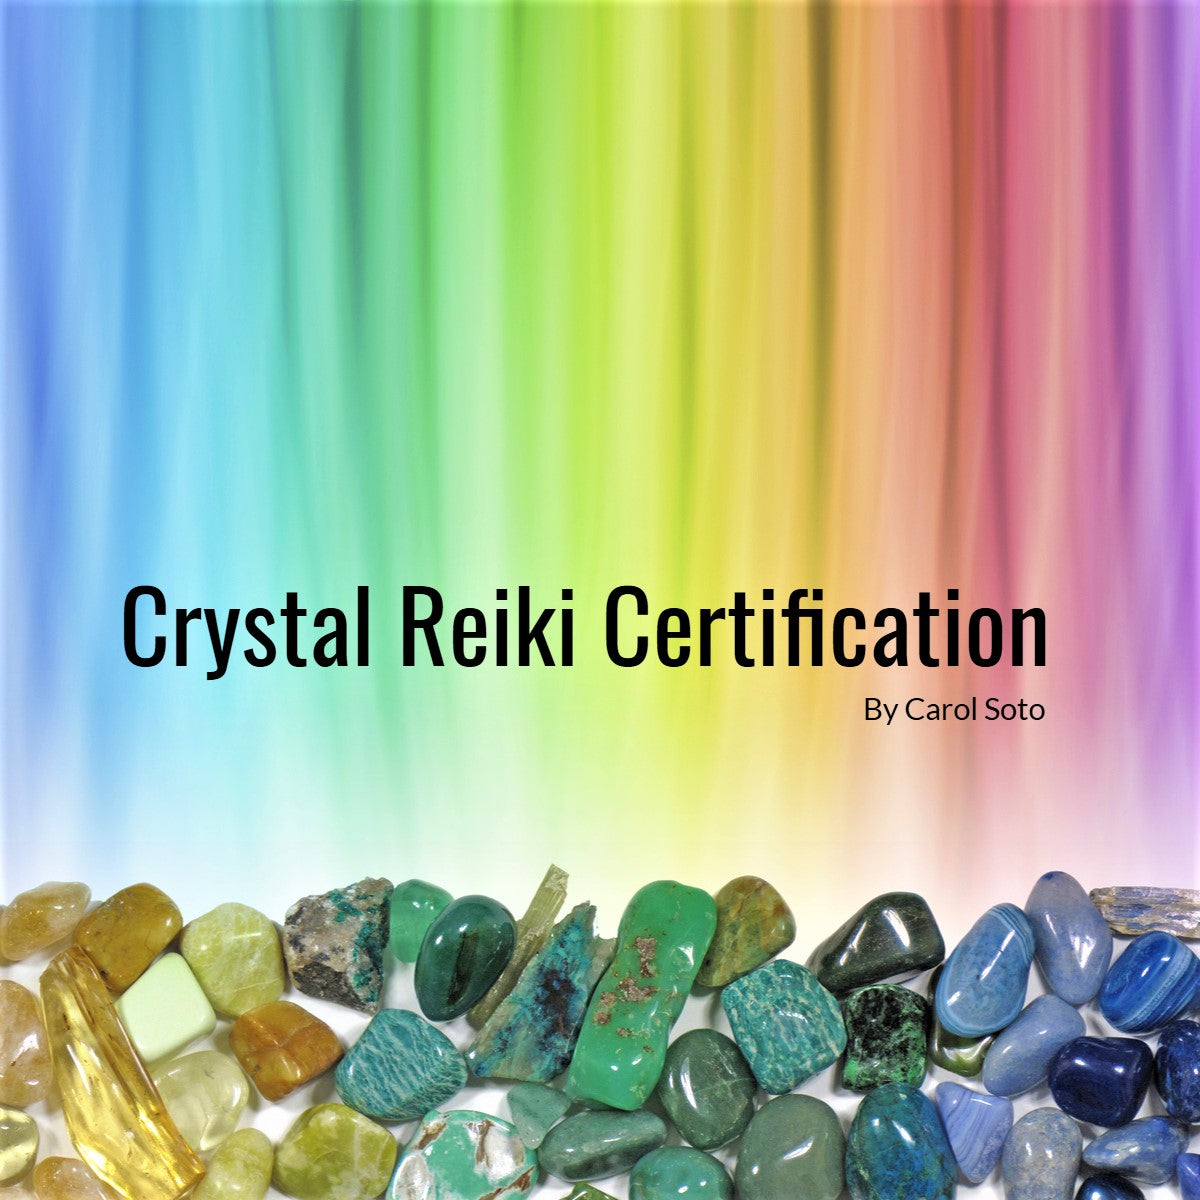 Crystal Reiki Training/Teaching